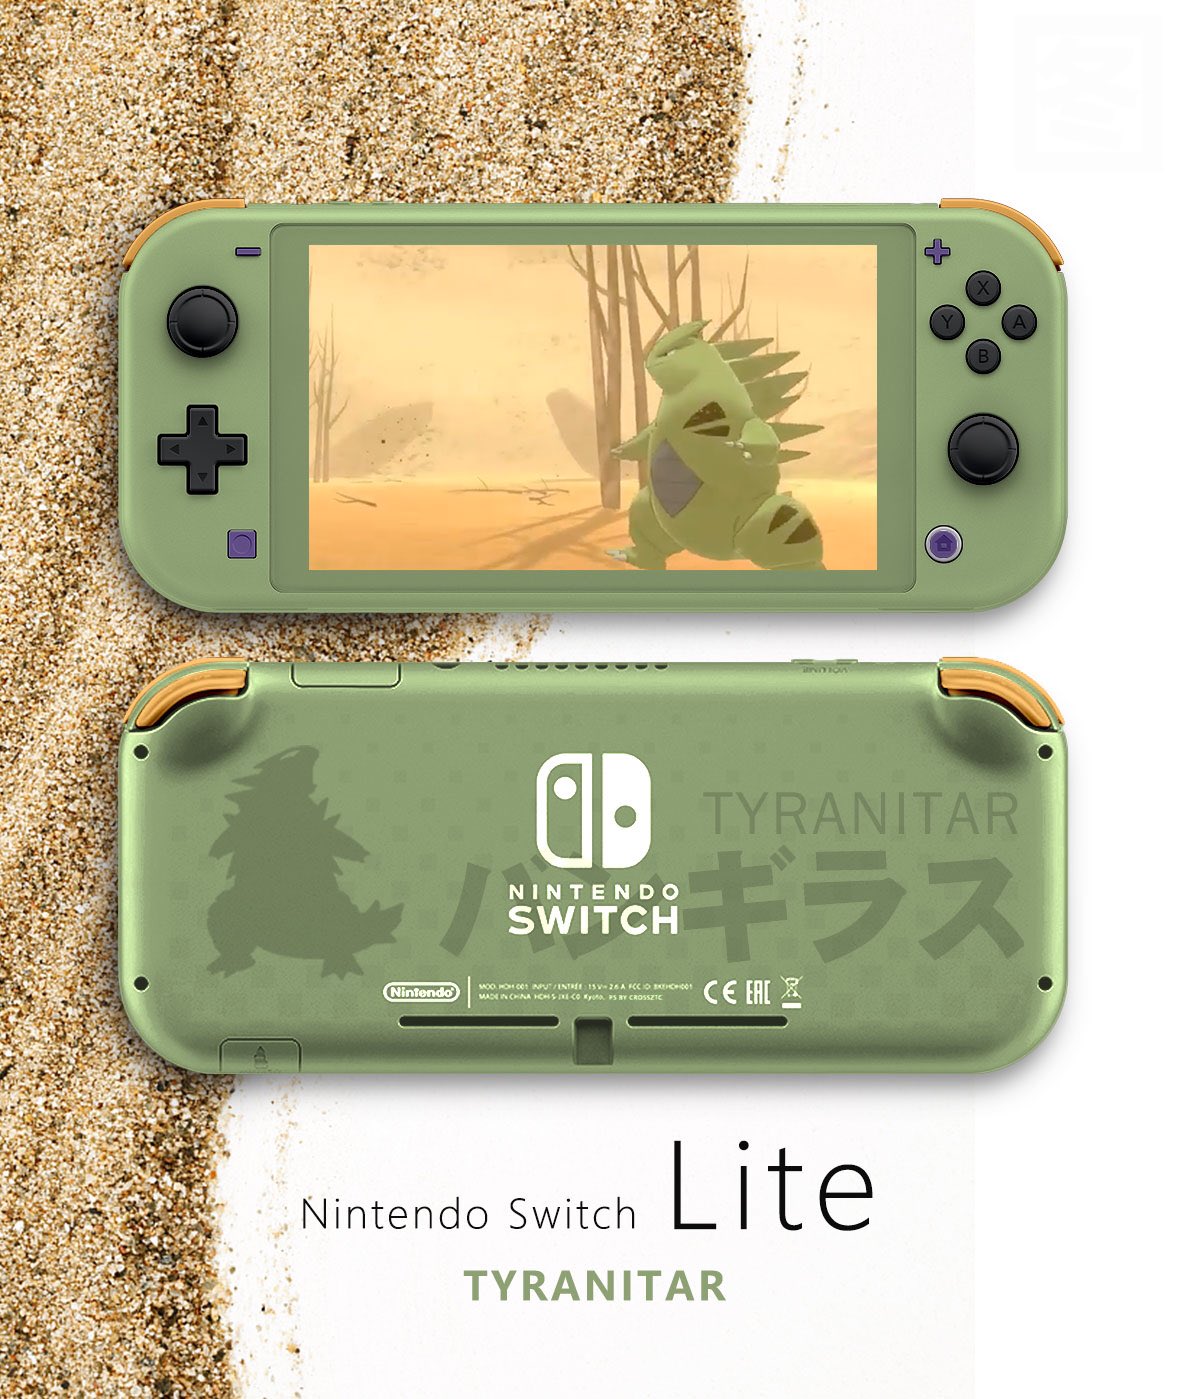 Nueva Nintendo Switch Lite tematizada con motivos de Pokémon